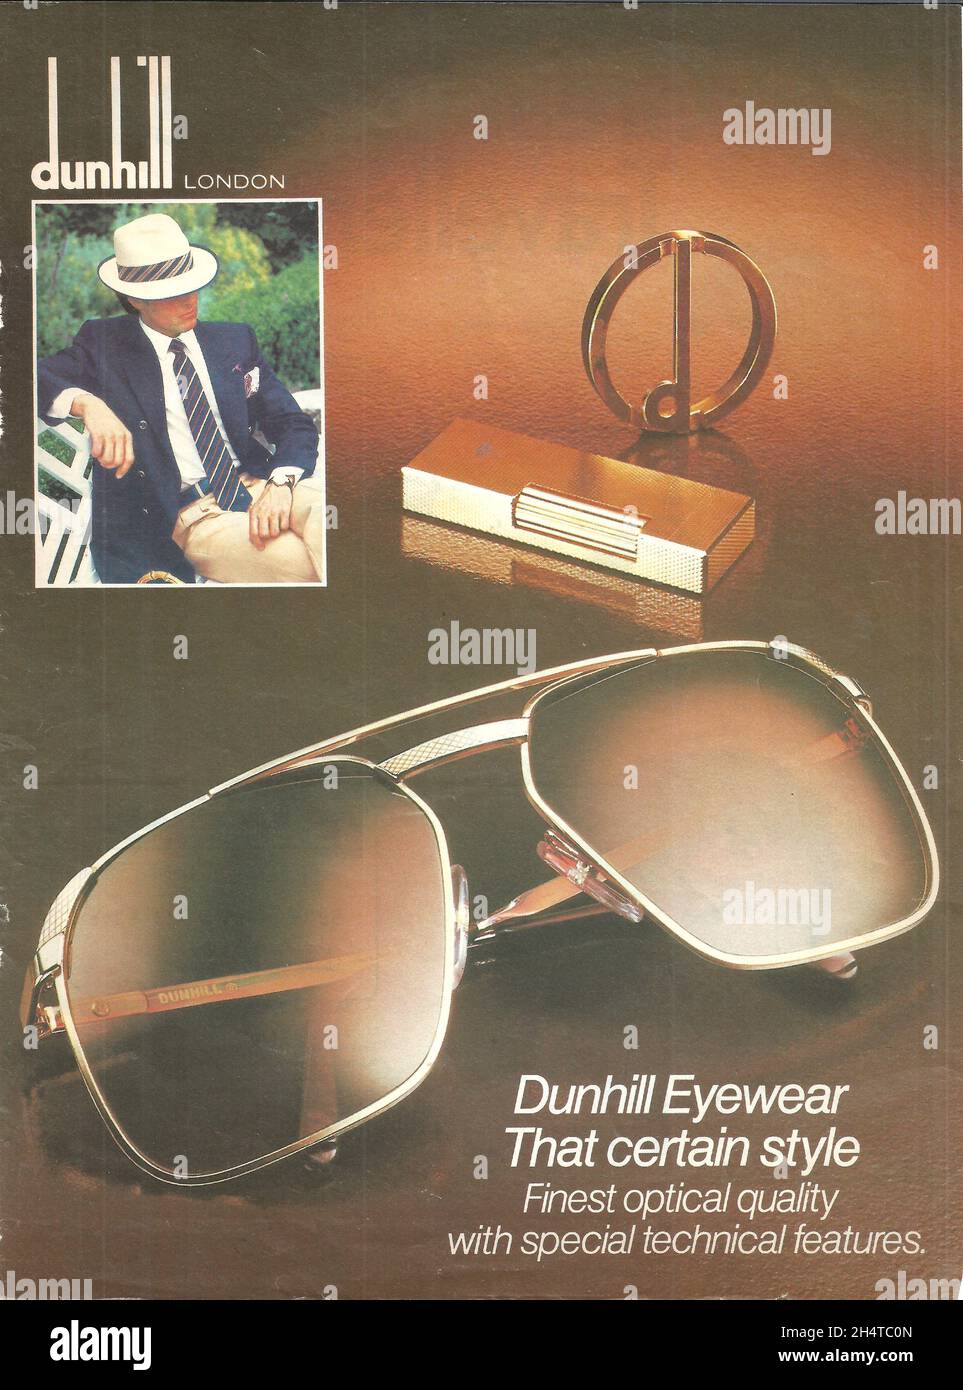 Dunhill eyeware glasses sunglasses vintage advertisement advert ad 1980s 1970s Stock Photo